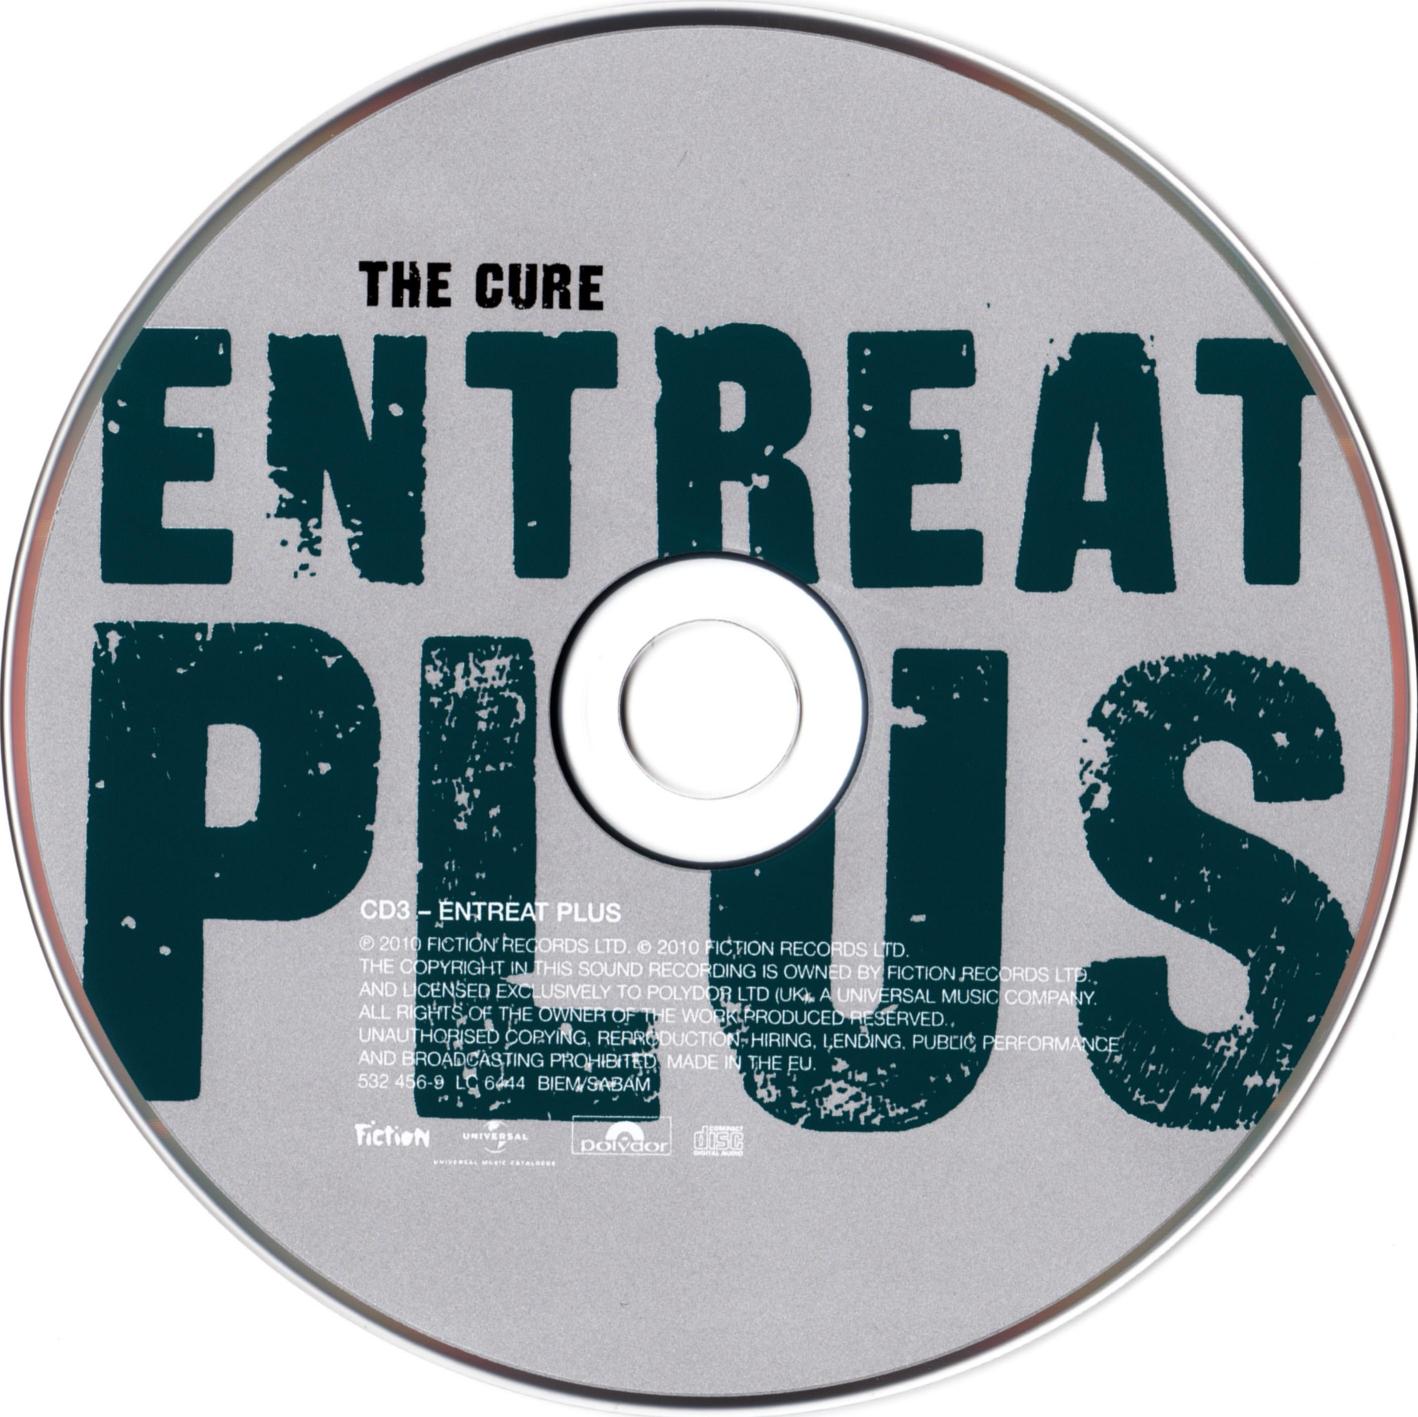 The Cure - Disintegration Deluxe Edition Cd2 2010.rar